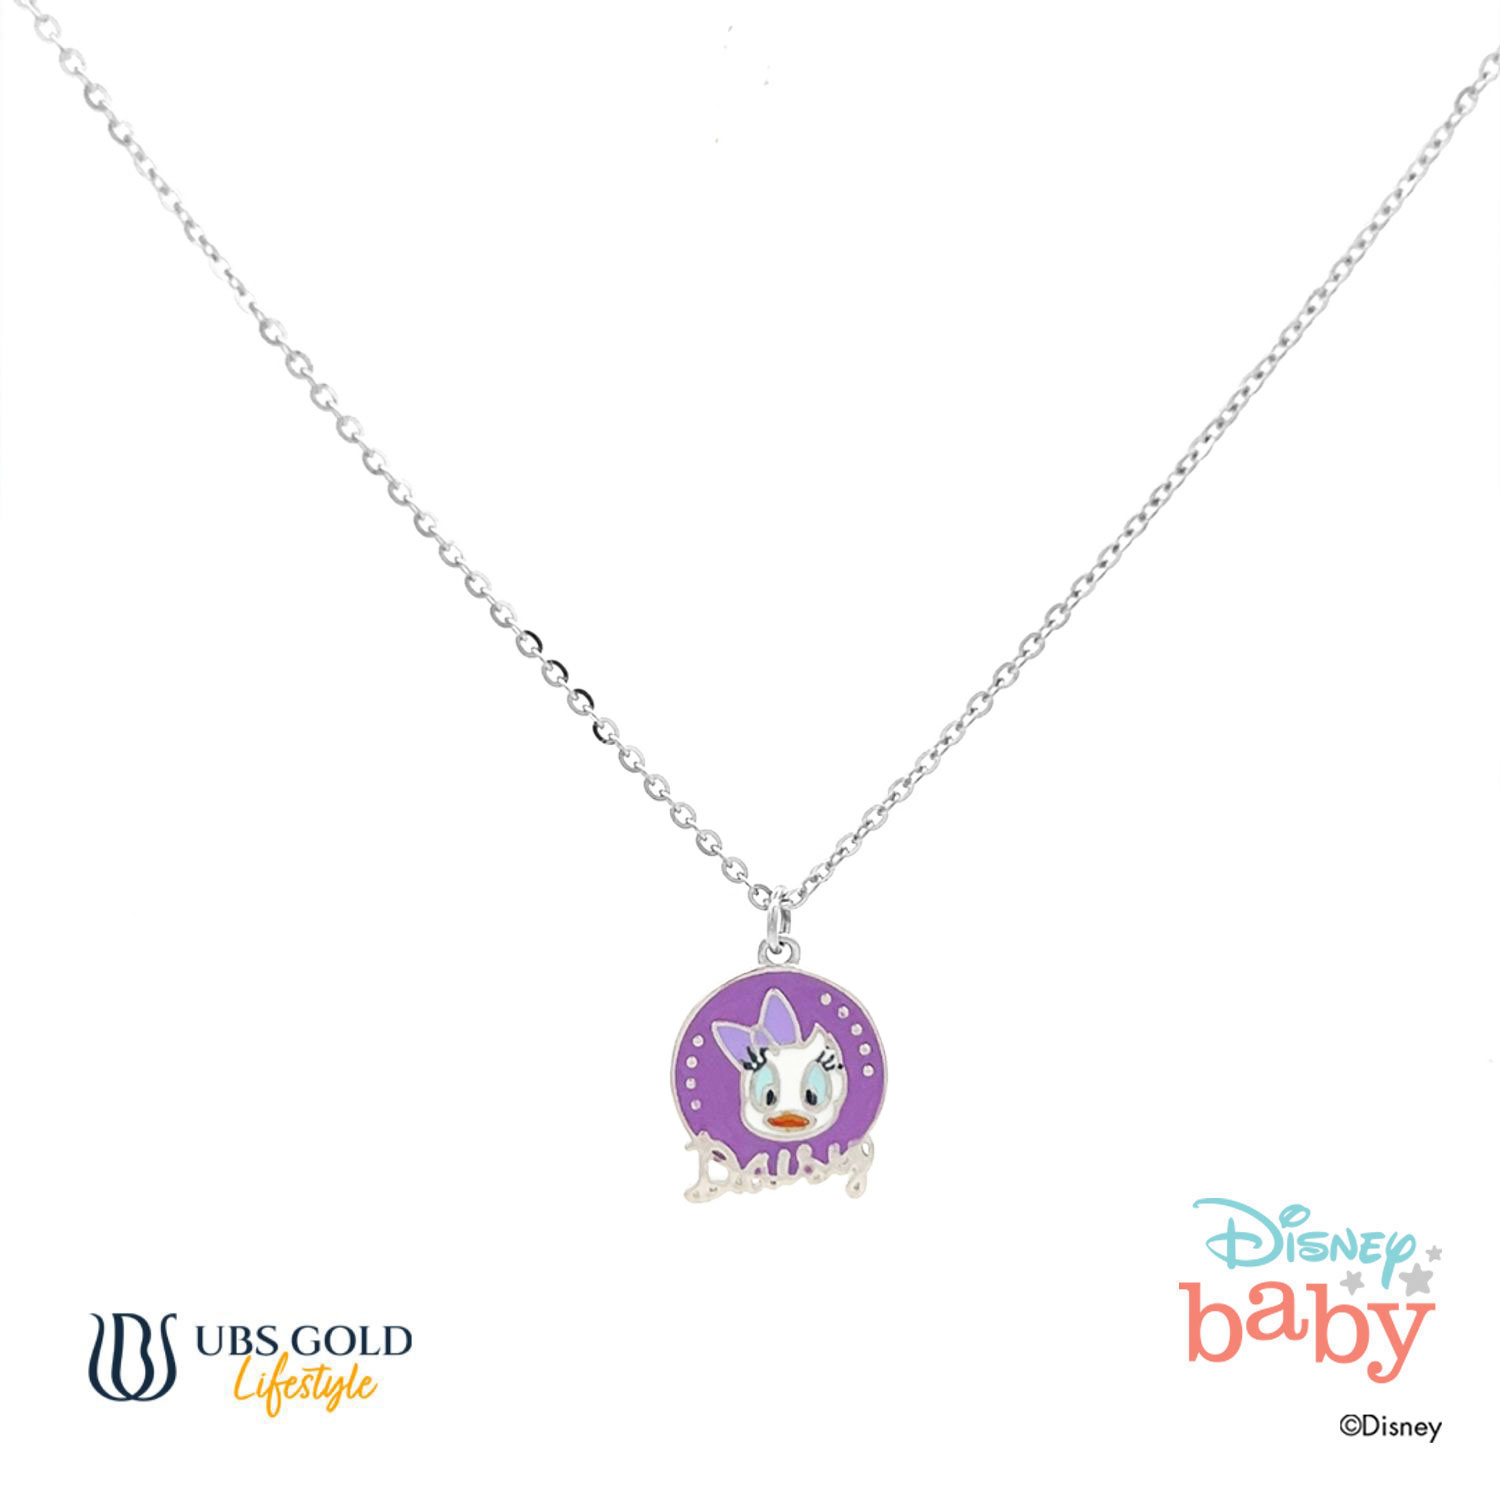 UBS Gold Kalung Emas Anak Disney Daisy Duck - Kky0089 - 17K